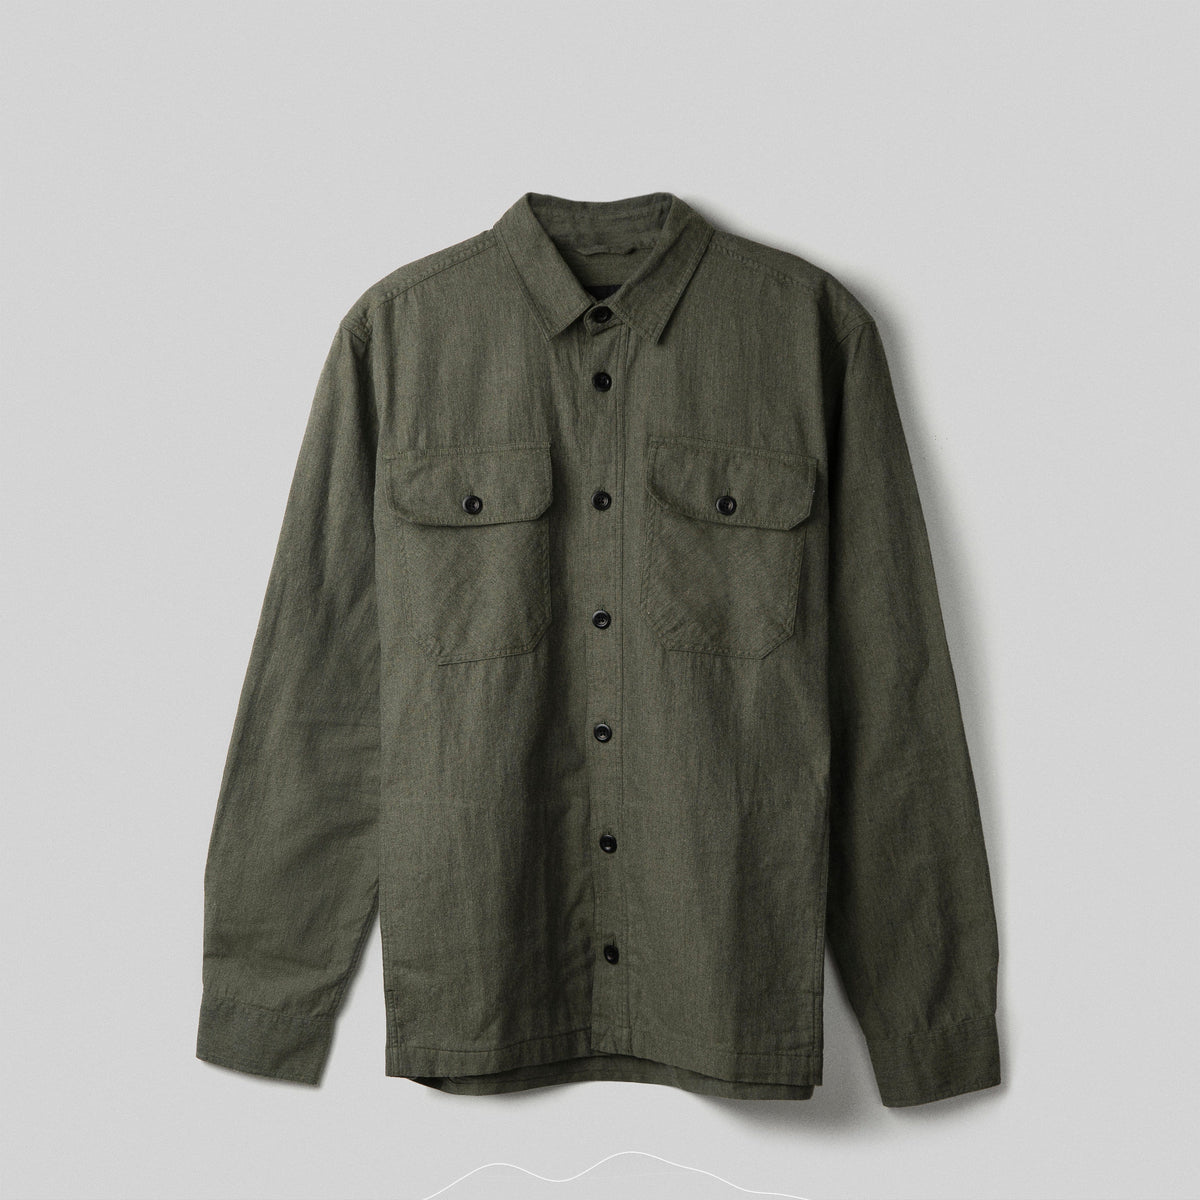 FRAHM Jacket In Stock S / Deep Sage Green Lightweight Flannel Work Shirt